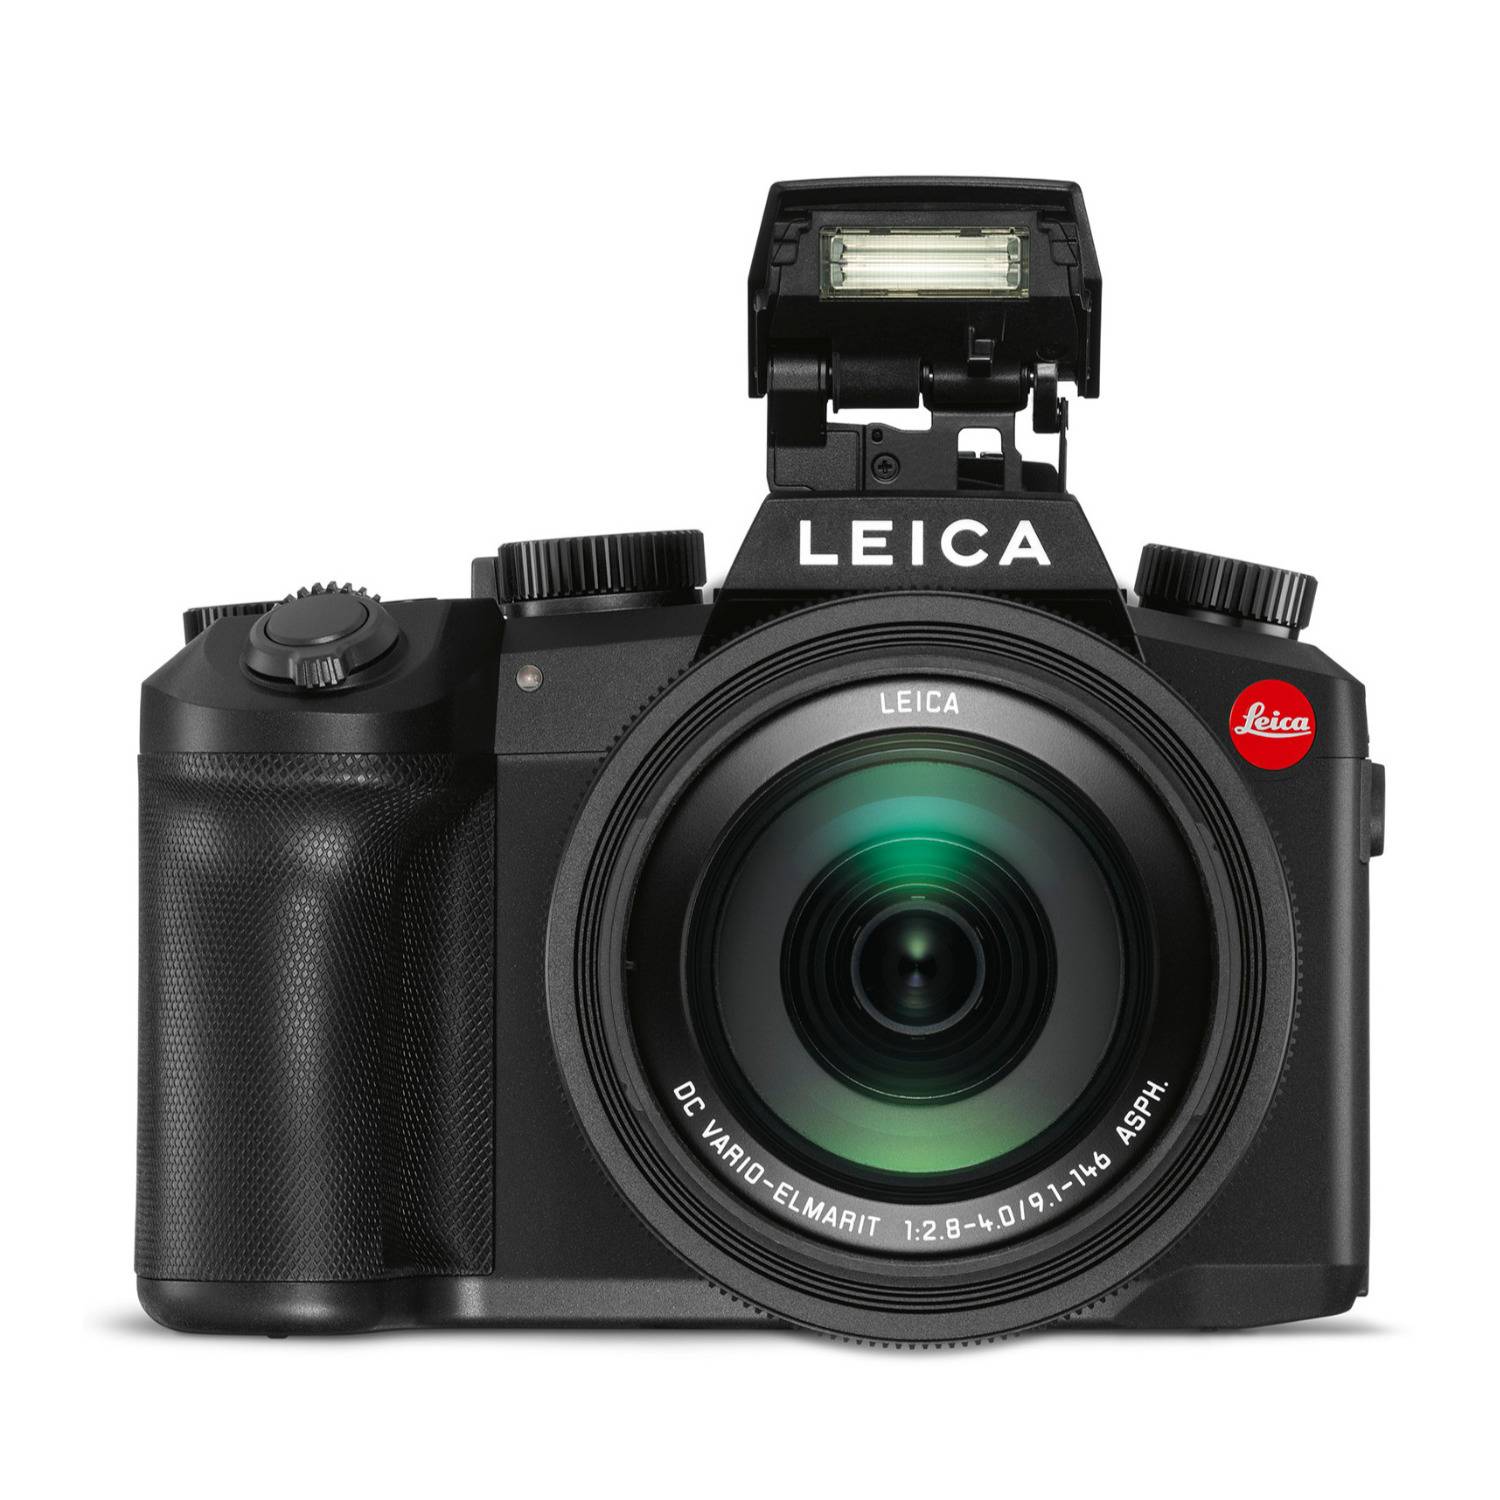 Leica V-Lux 5 20MP Superzoom Digital Camera